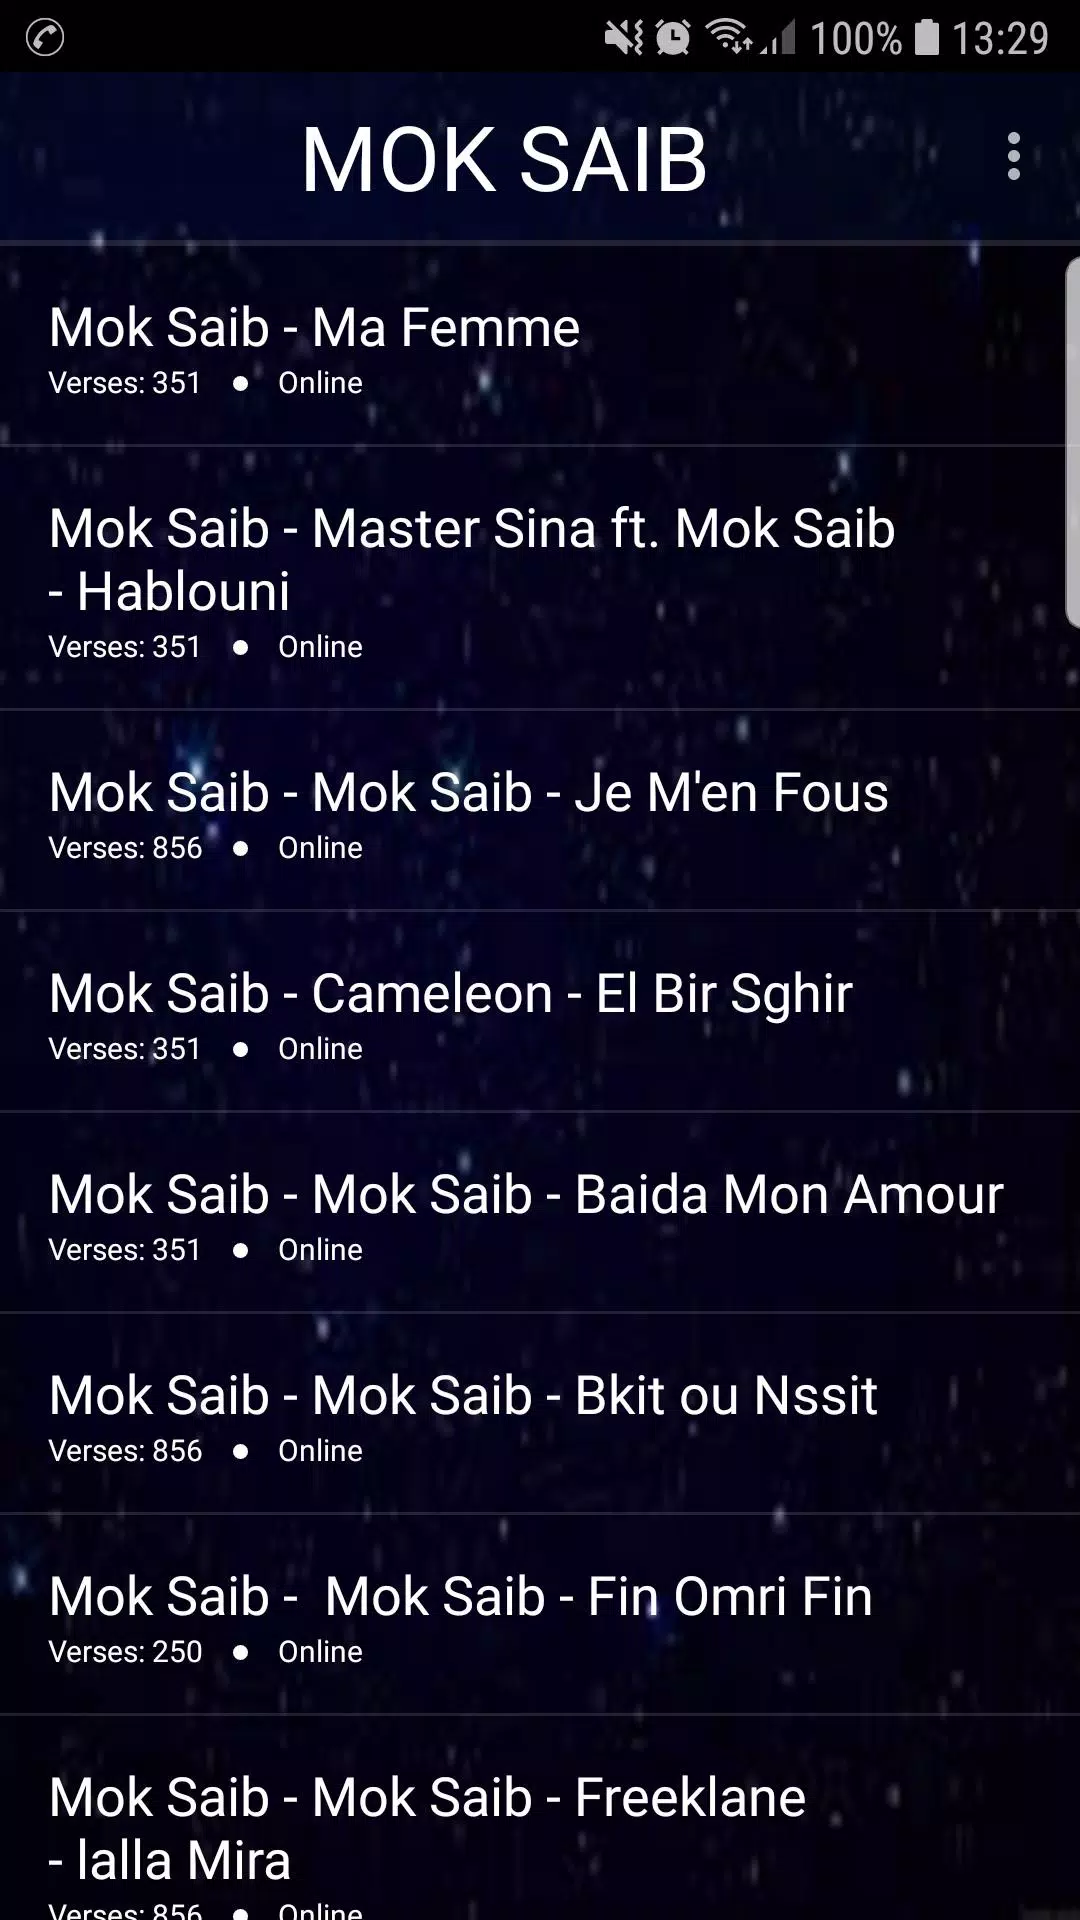 music mok saib2019-MP3 APK for Android Download